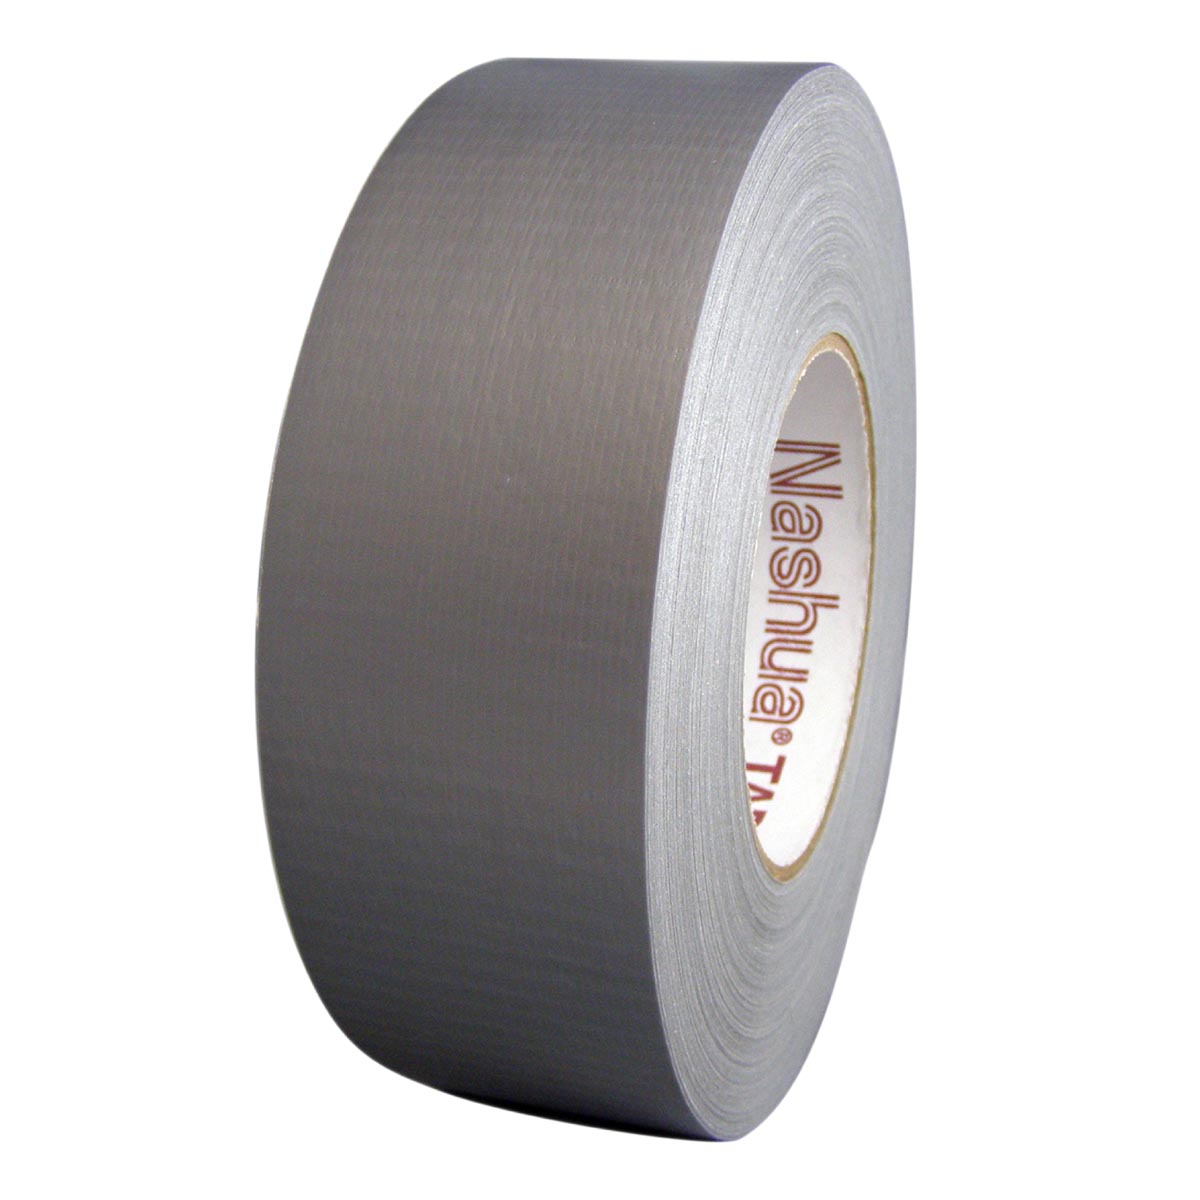 Polyken 100D Premium Double-Sided Carpet Tape